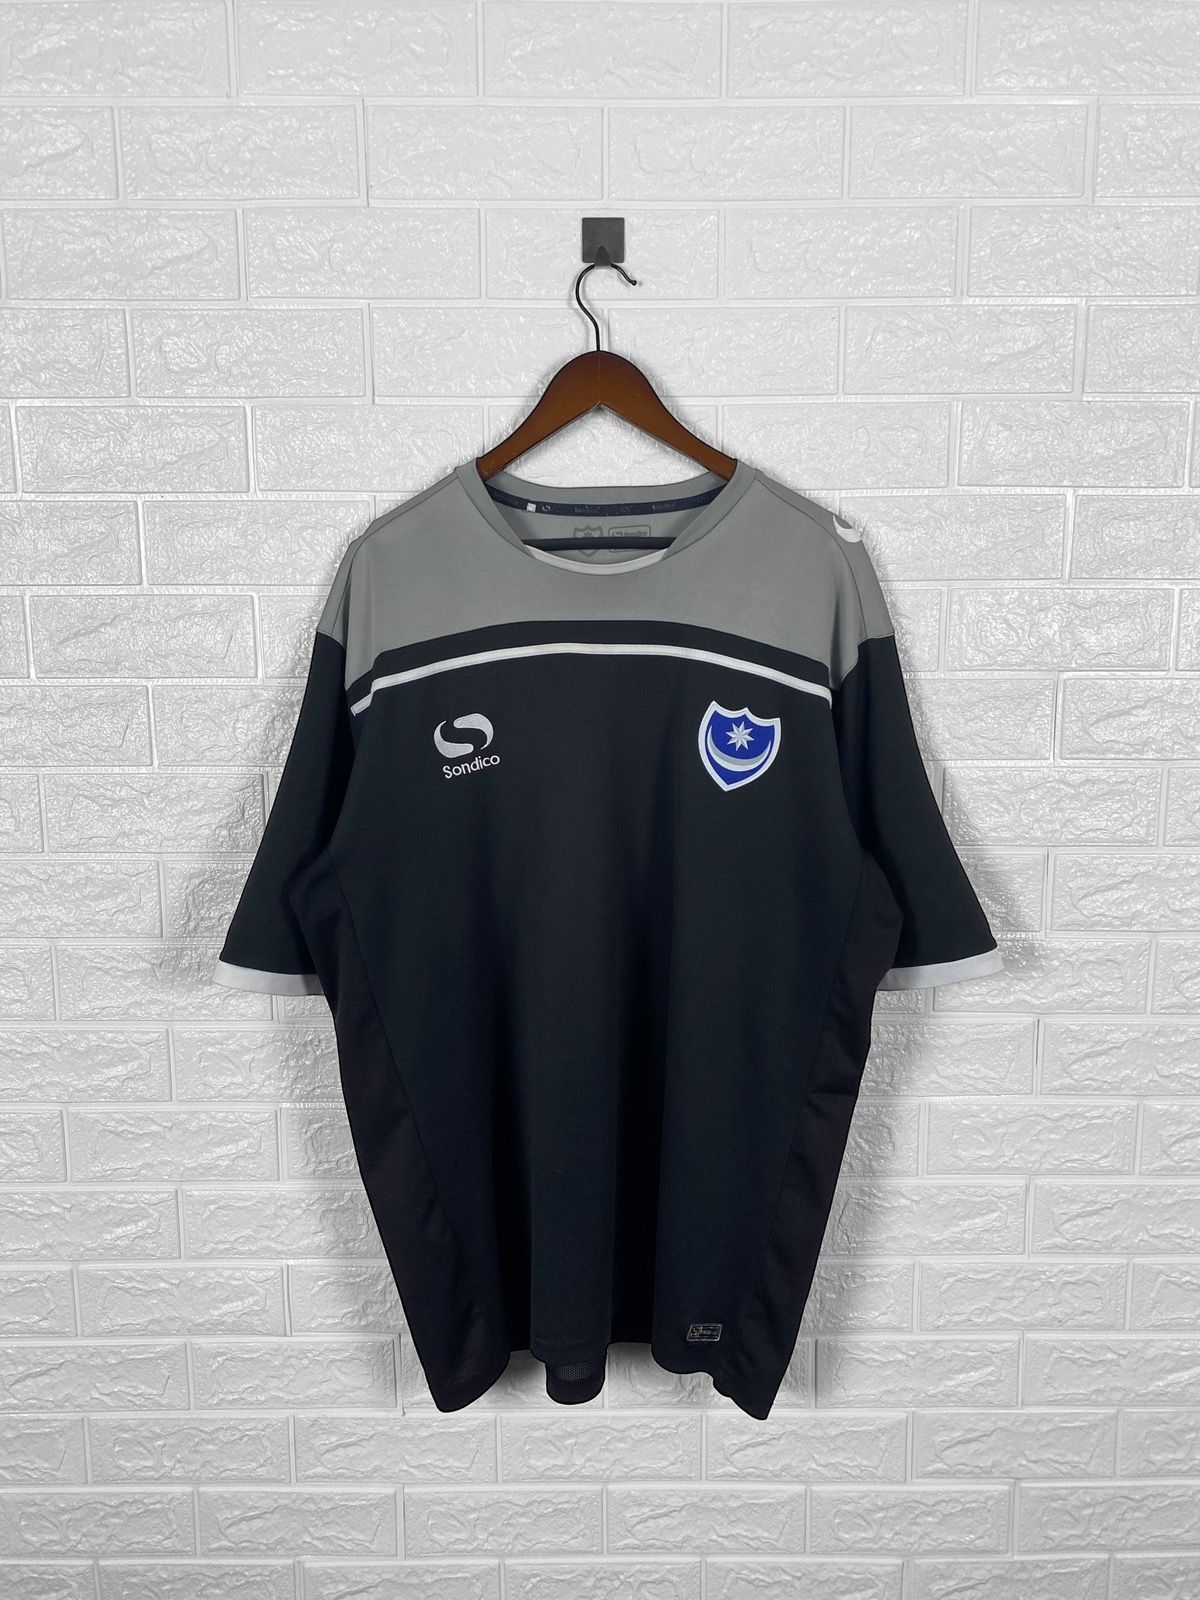 Pre-owned Jersey X Soccer Jersey Sondico 2015 2016 Portsmouth Football Soccer Jersey In Black/grey